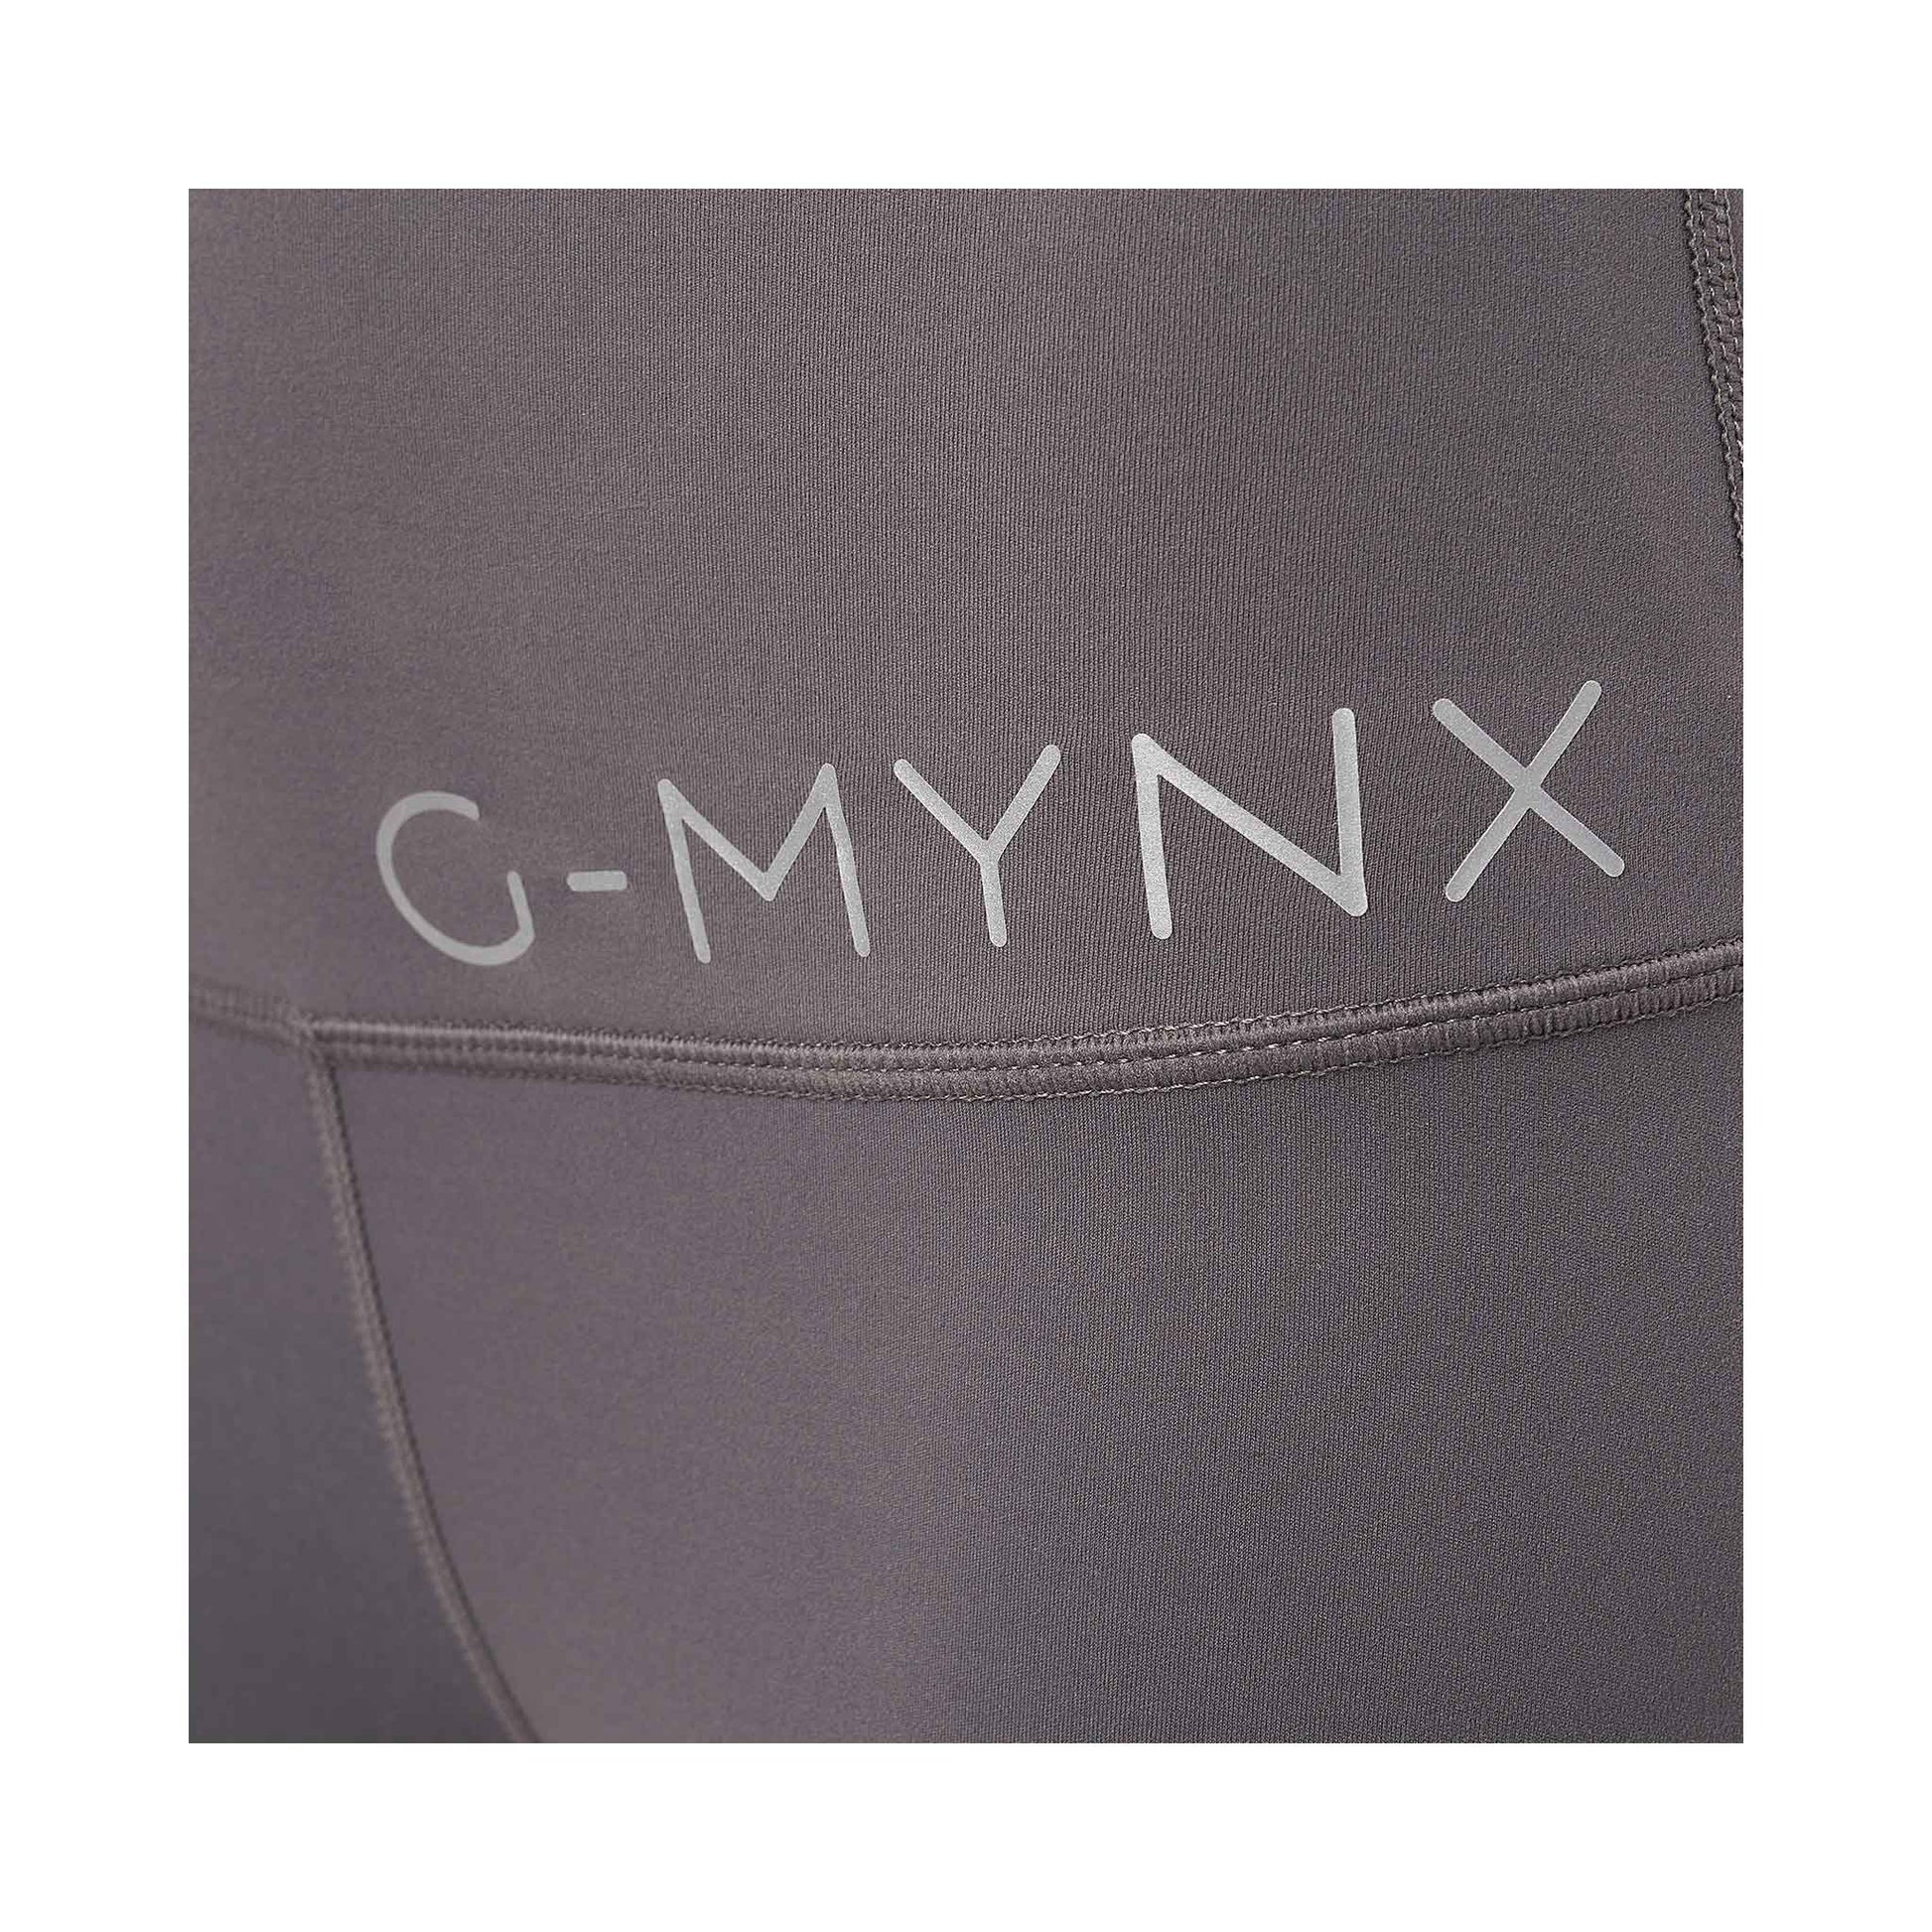 G-Mynx Signature Leggings (Dove Grey)